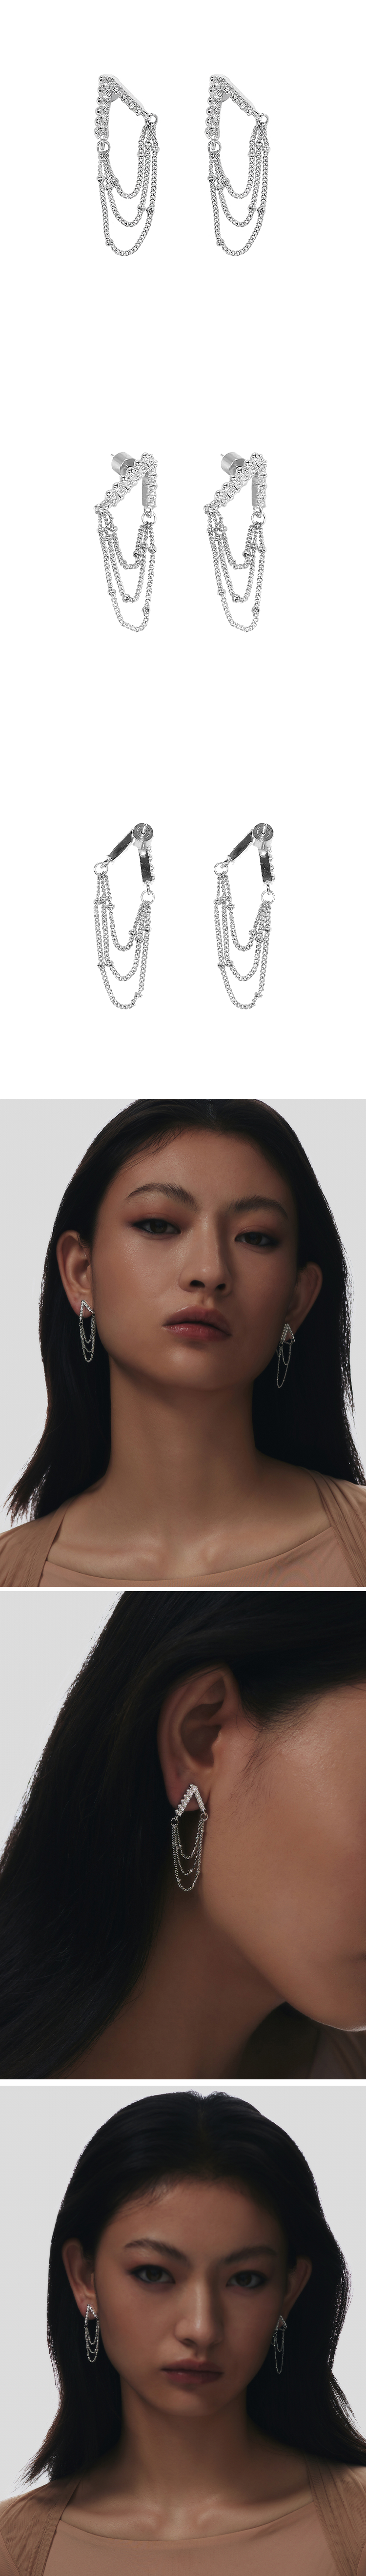 karat with V-shape earrings